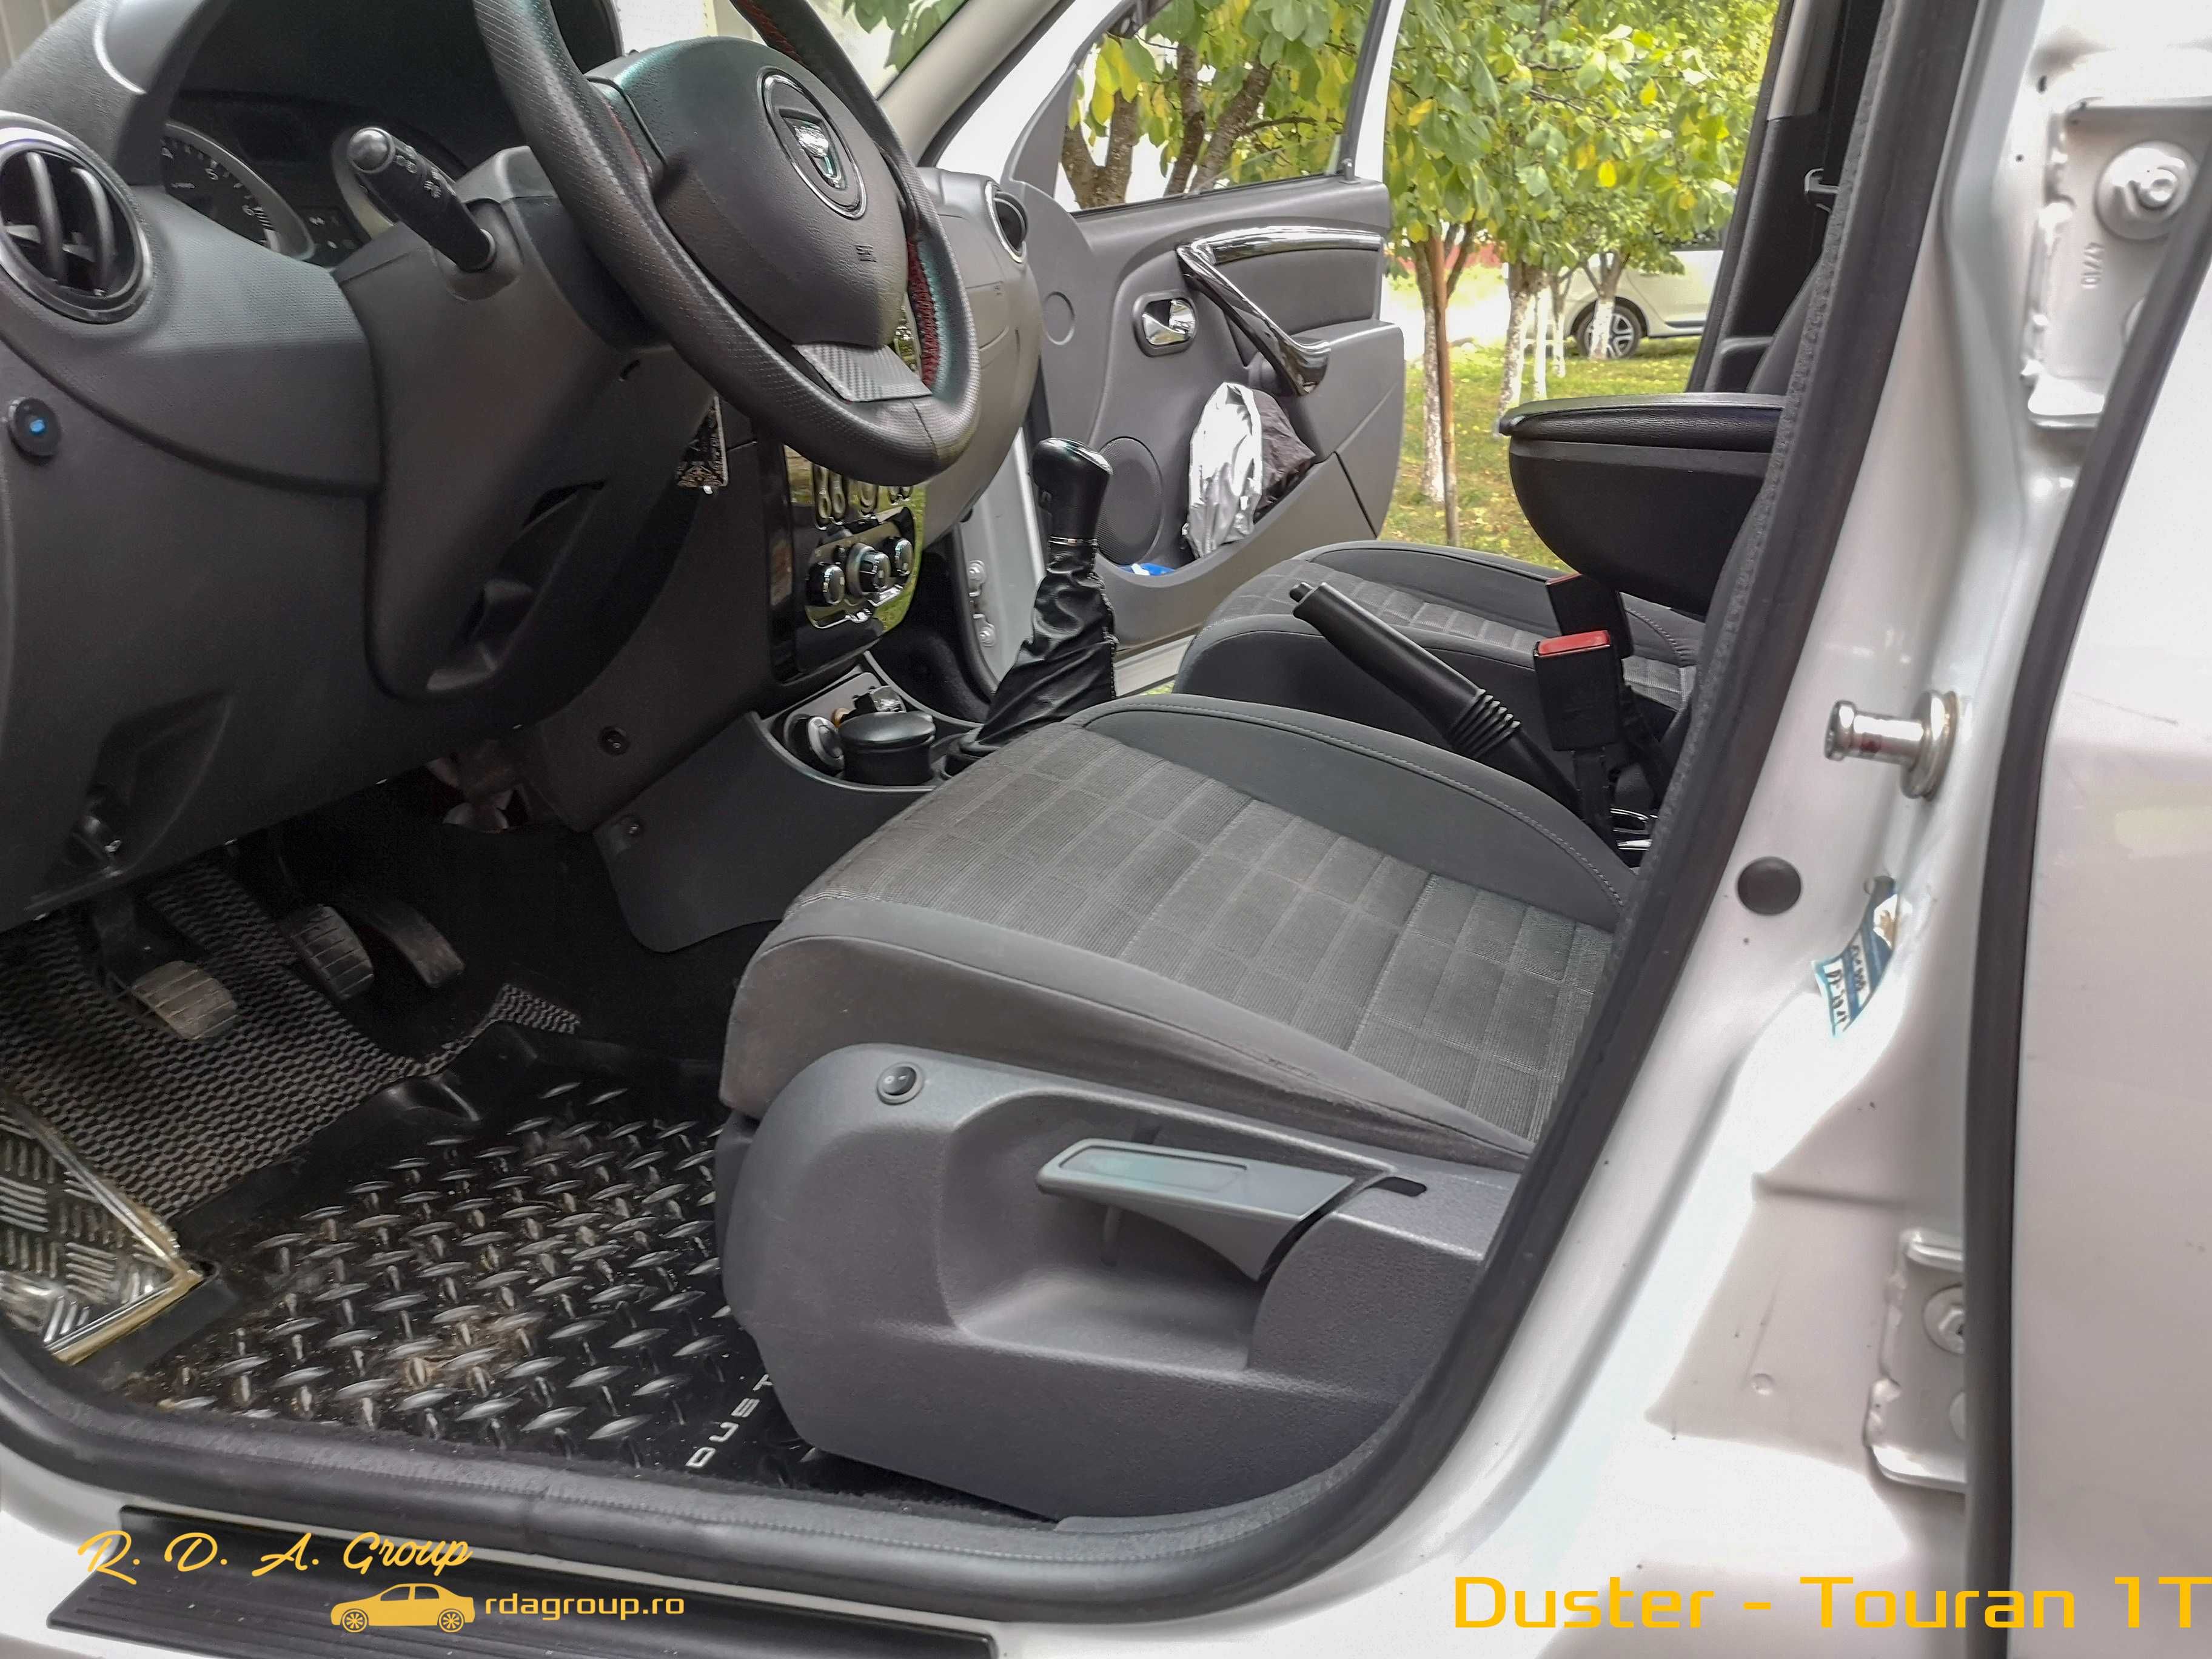 Sistem conversie scaune compatibil VW Touran 1T - Logan Duster Sandero